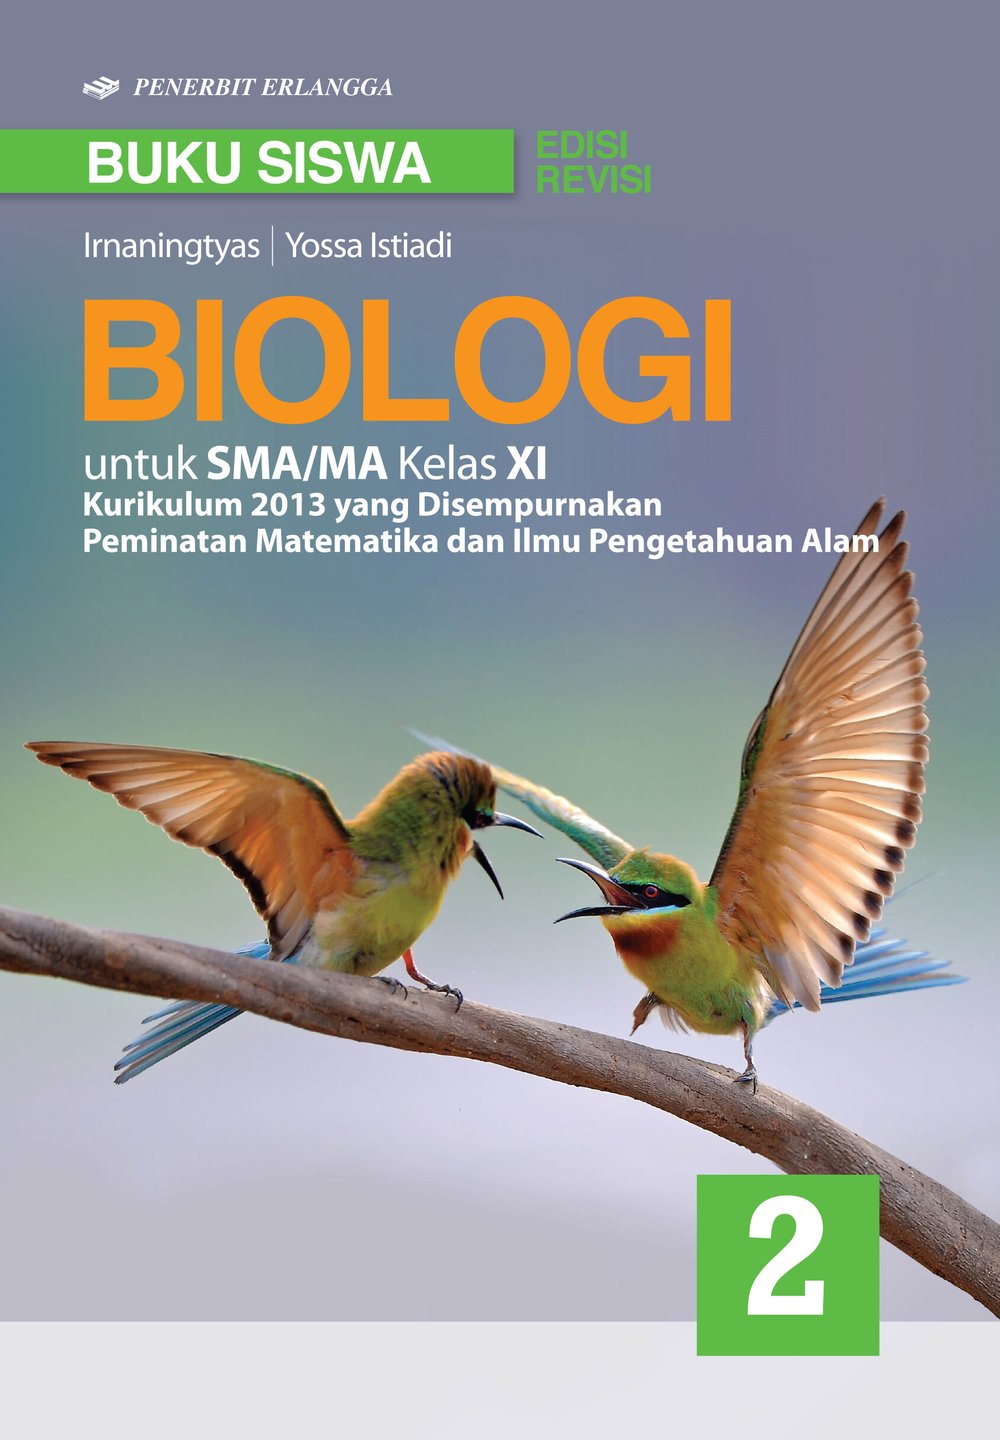 Buku Siswa Biologi Sma Ma Kelas Xi Kurikulum 2013 Yang Disempurnakan Peminatan Matematika Dan Ilmu Pengetahuan Alam Lazada Indonesia